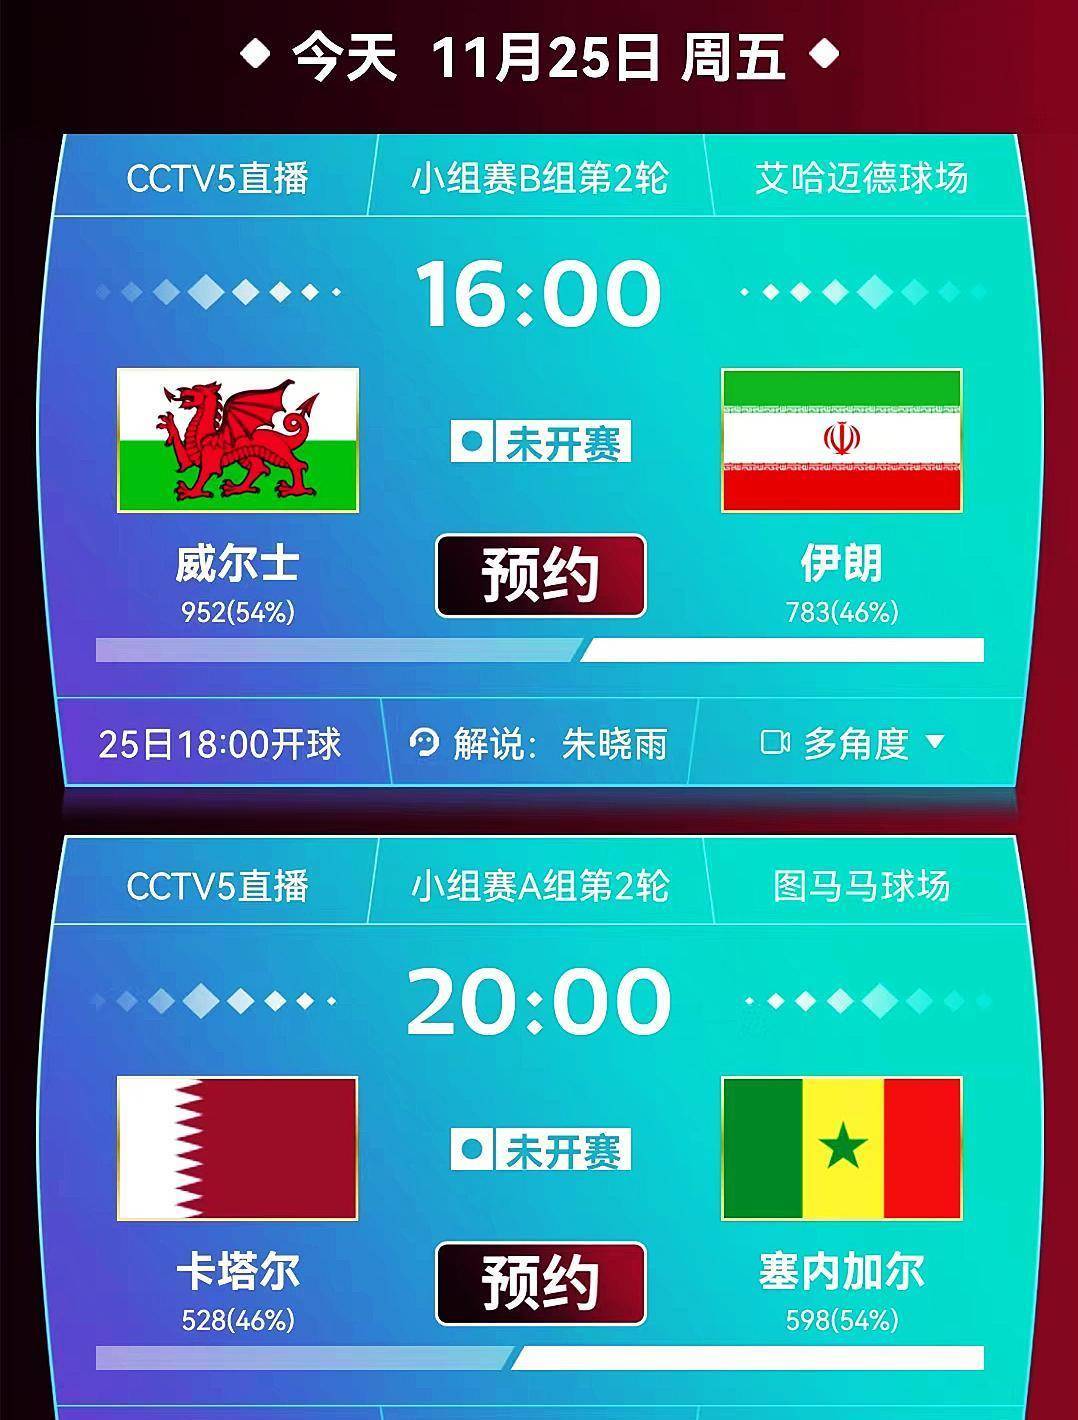 CCTV5将曲播世界杯威尔士VS伊朗和卡塔尔VS塞内加尔，旁观亚洲区预选赛第二轮